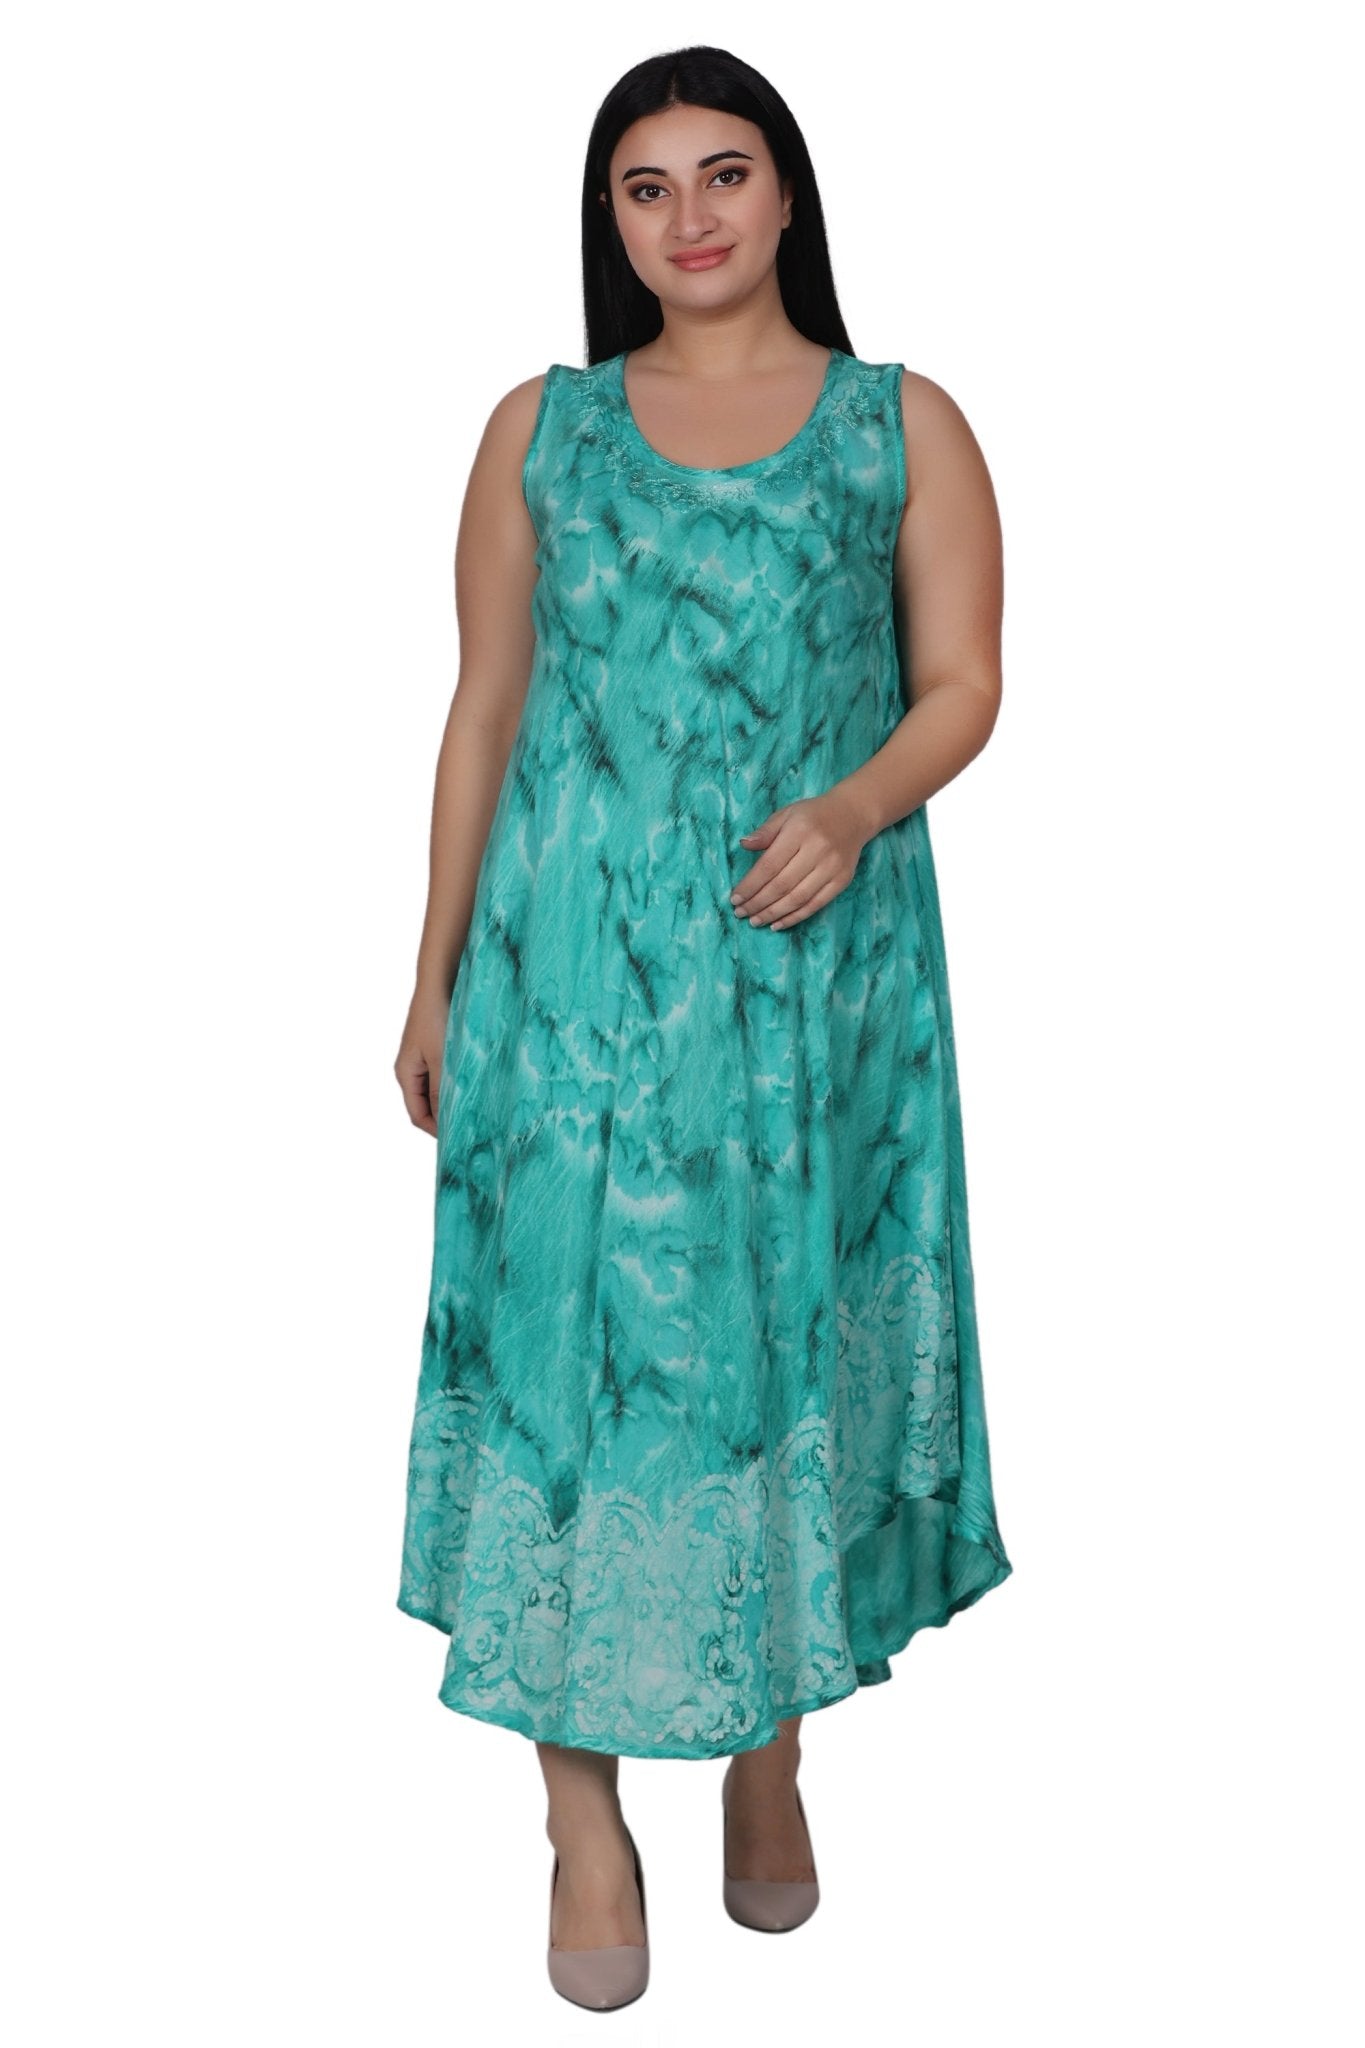 Border Block Print Tie Dye Dress 522183 - Advance Apparels Inc